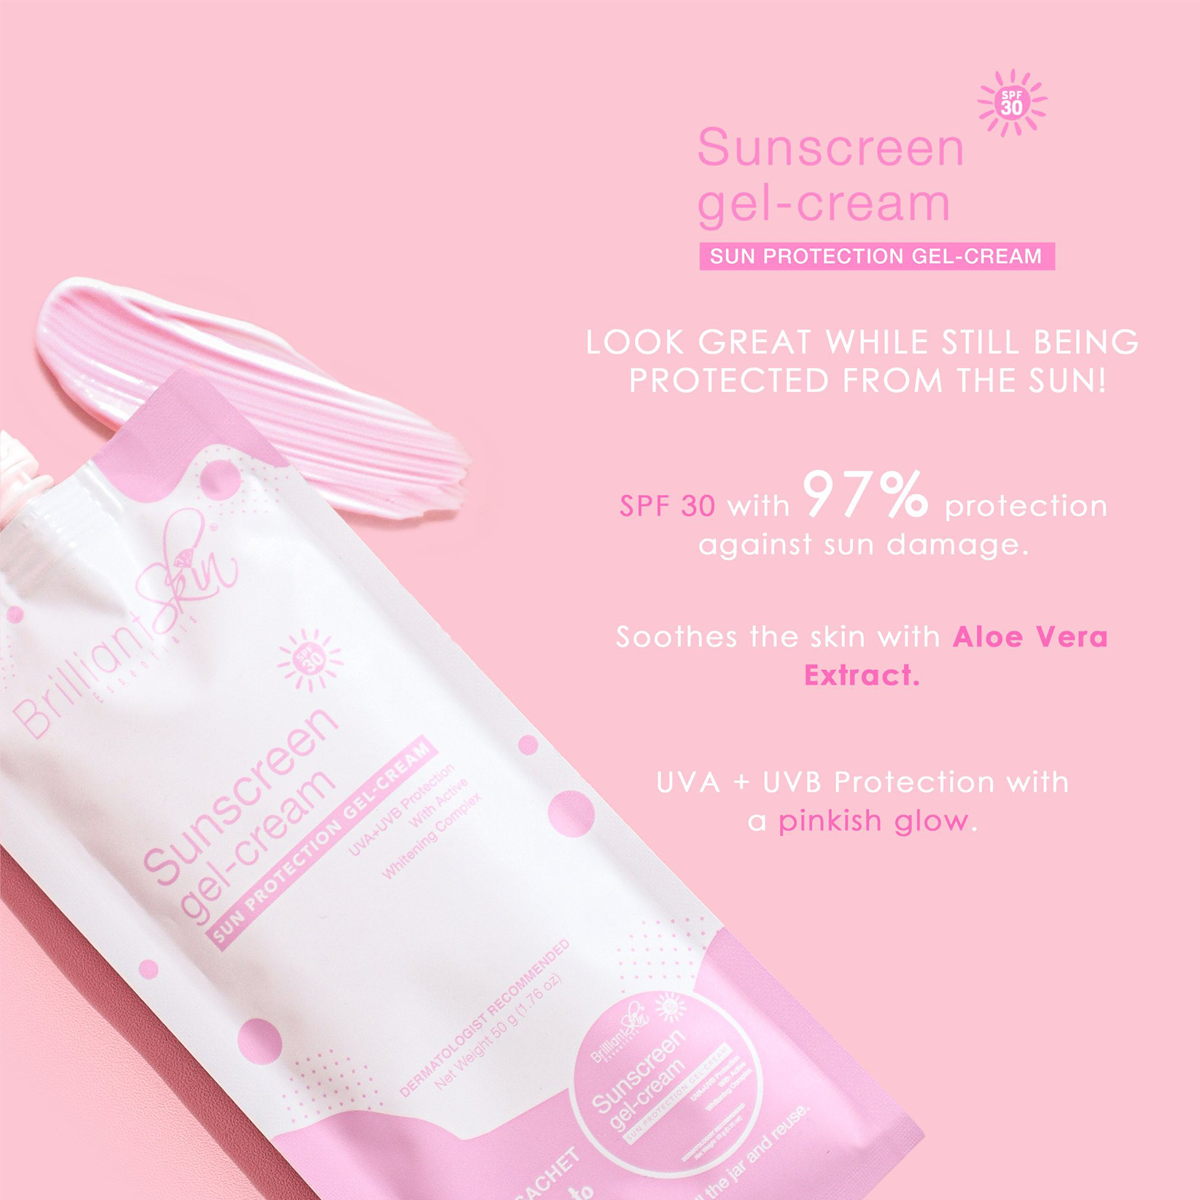 Brilliant Skin Sunscreen Gel-Cream SPF30 50g benefits